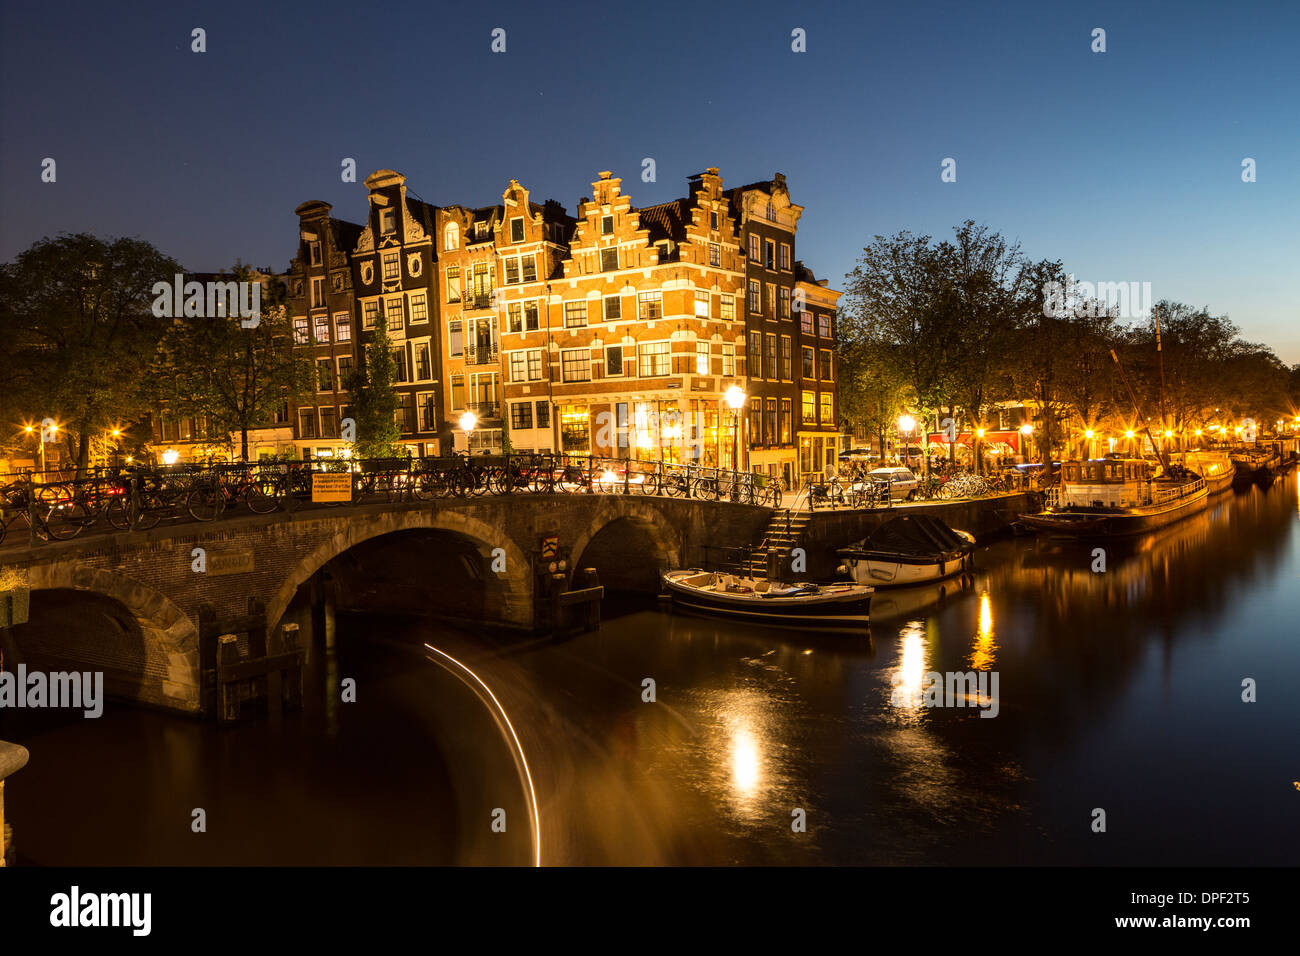 Grachten bei Nacht, Jordaan, Amsterdam, Niederlande Stockfoto